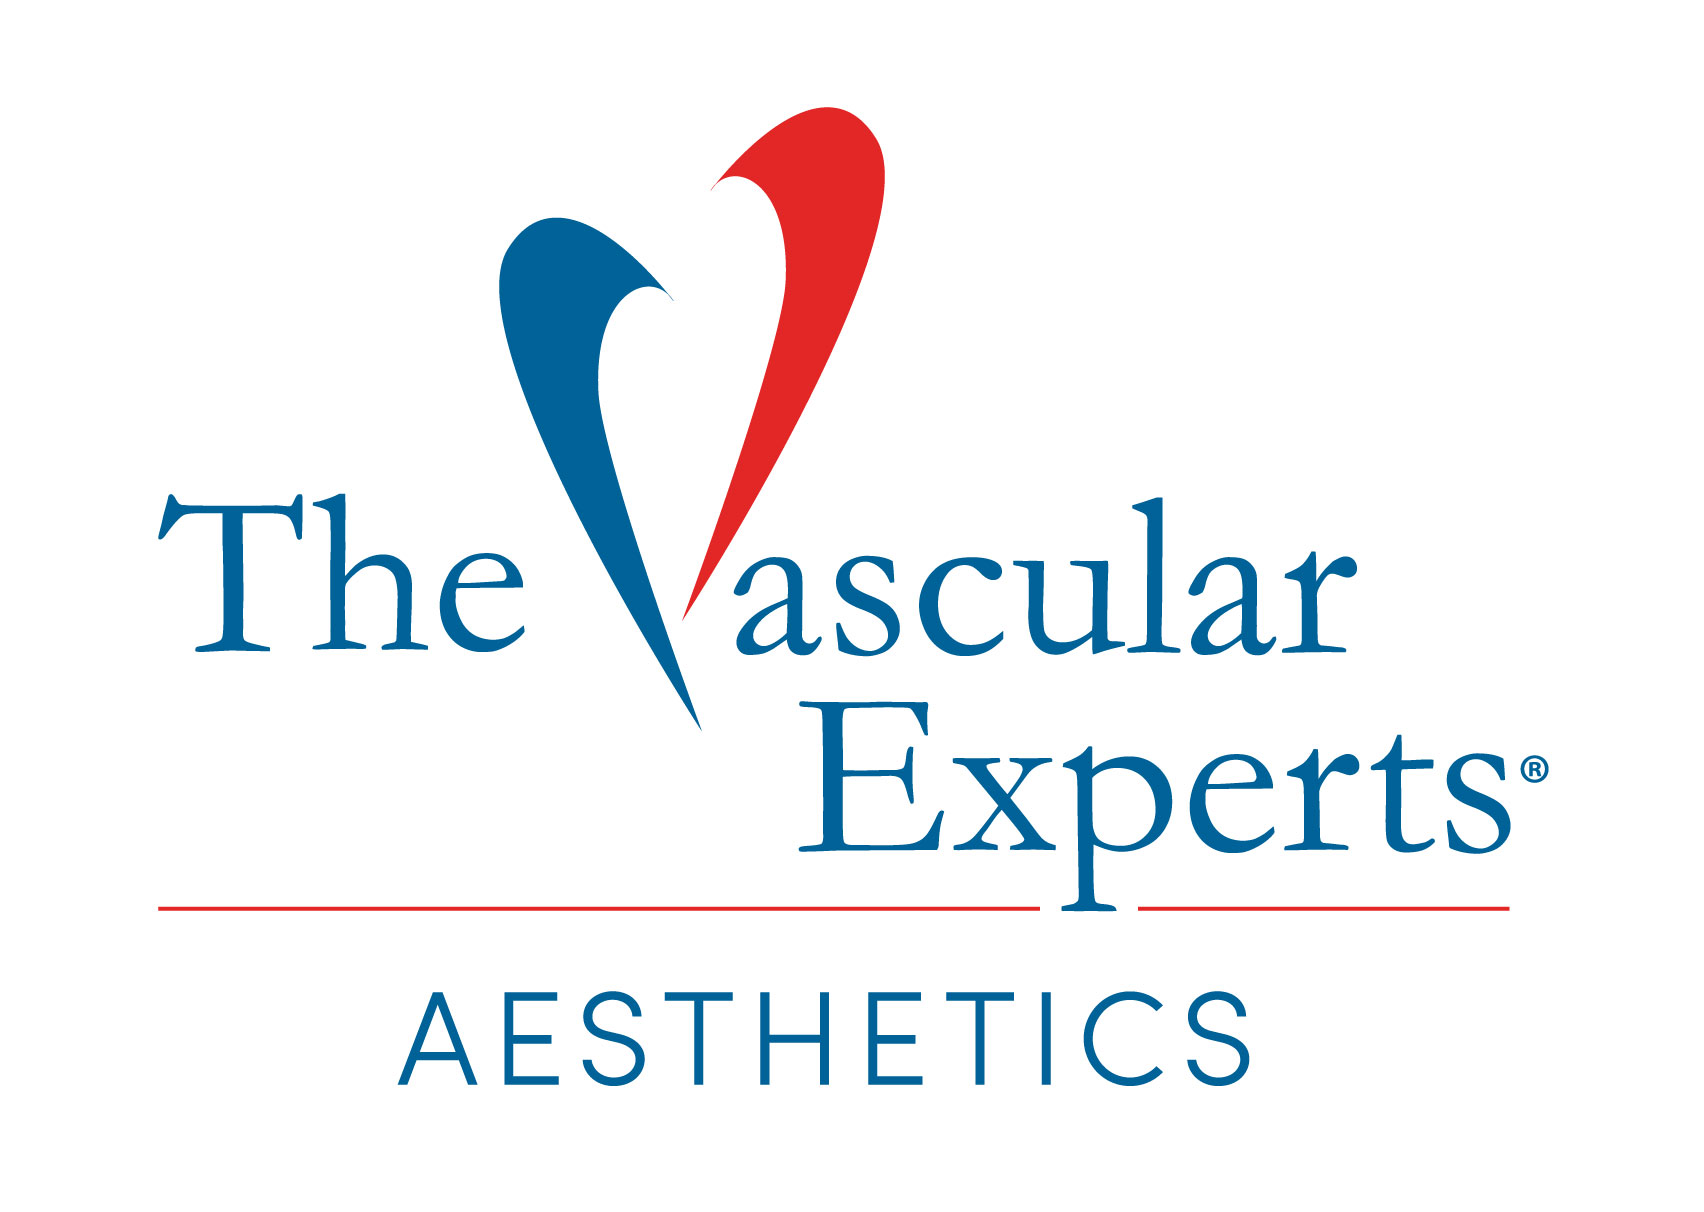 Vascular Experts Aesthetics, The